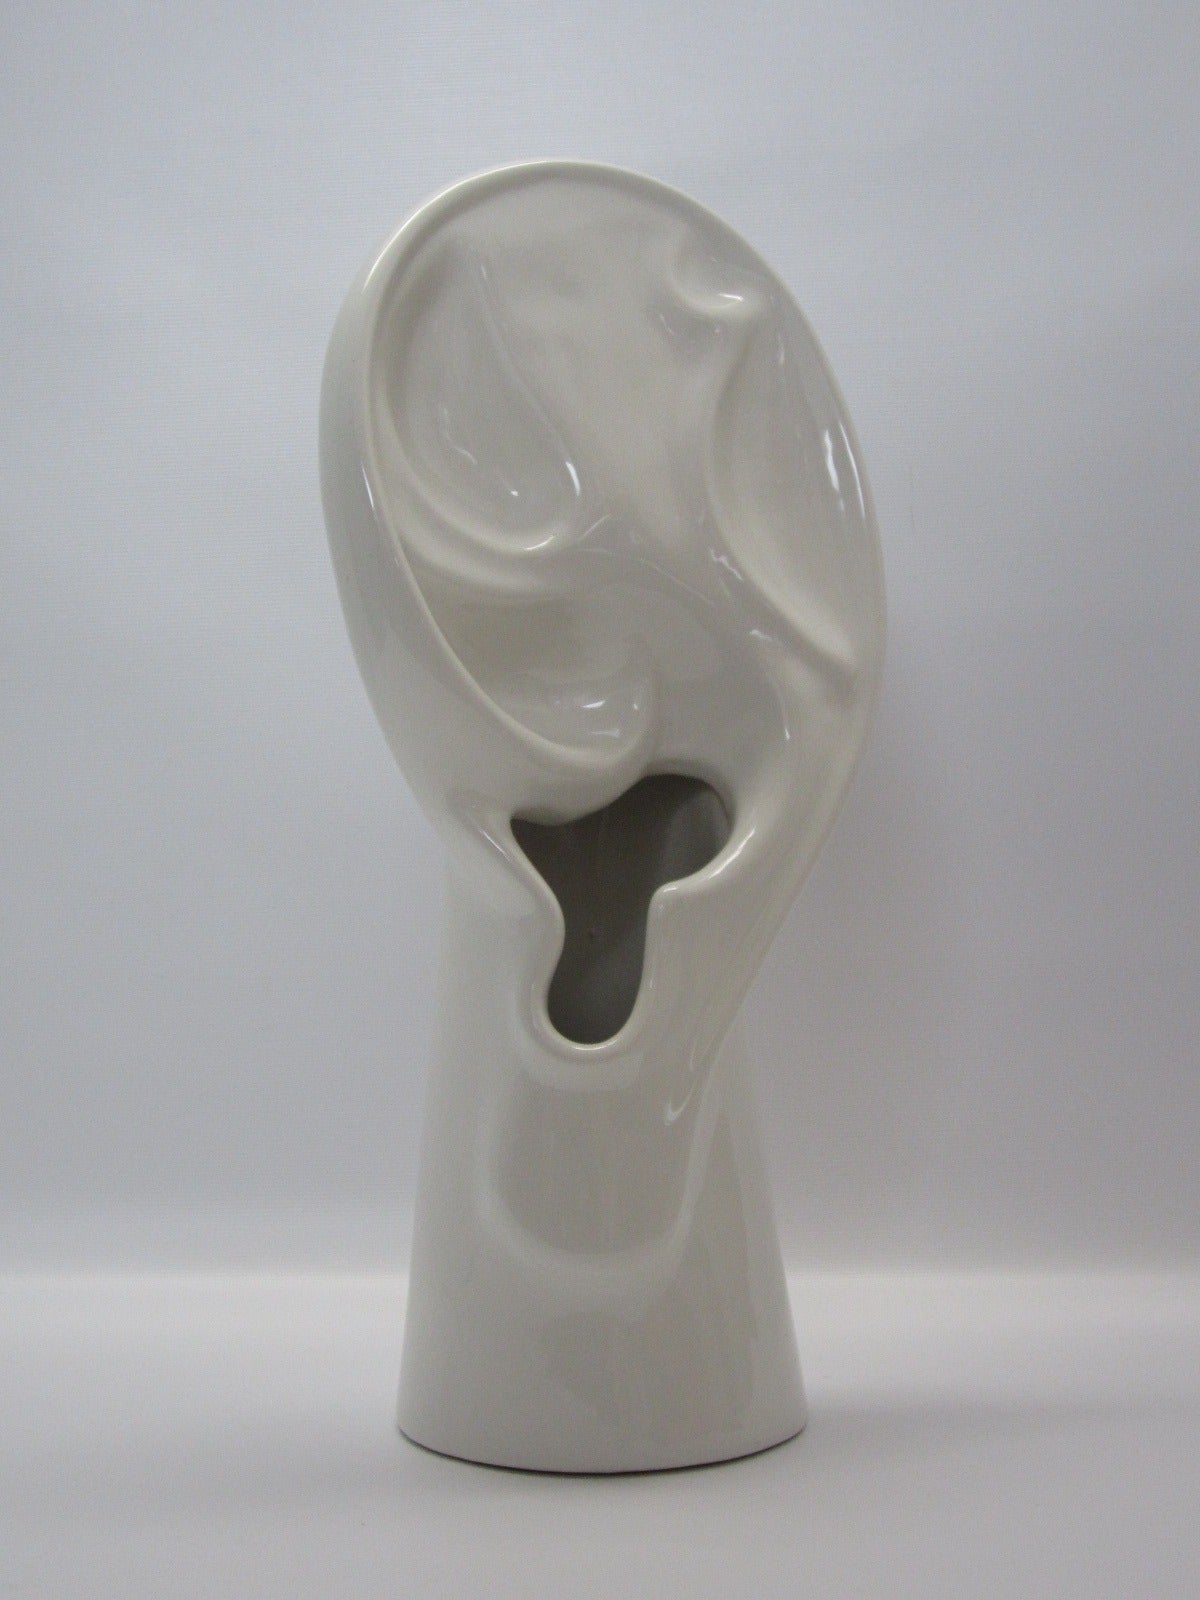 Porcelain vase by Raymor in the shape of an ear. Original sticker on bottom.